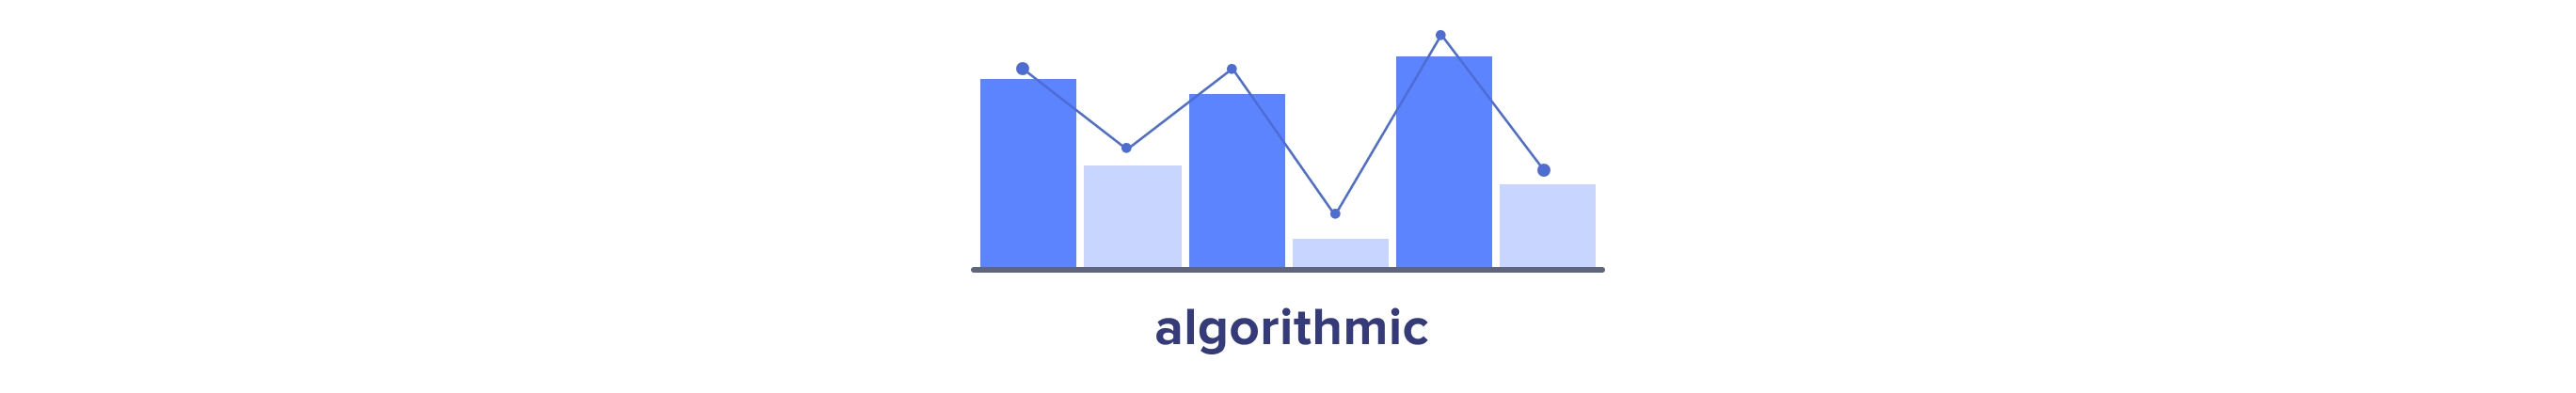 Algorithmic attribution model